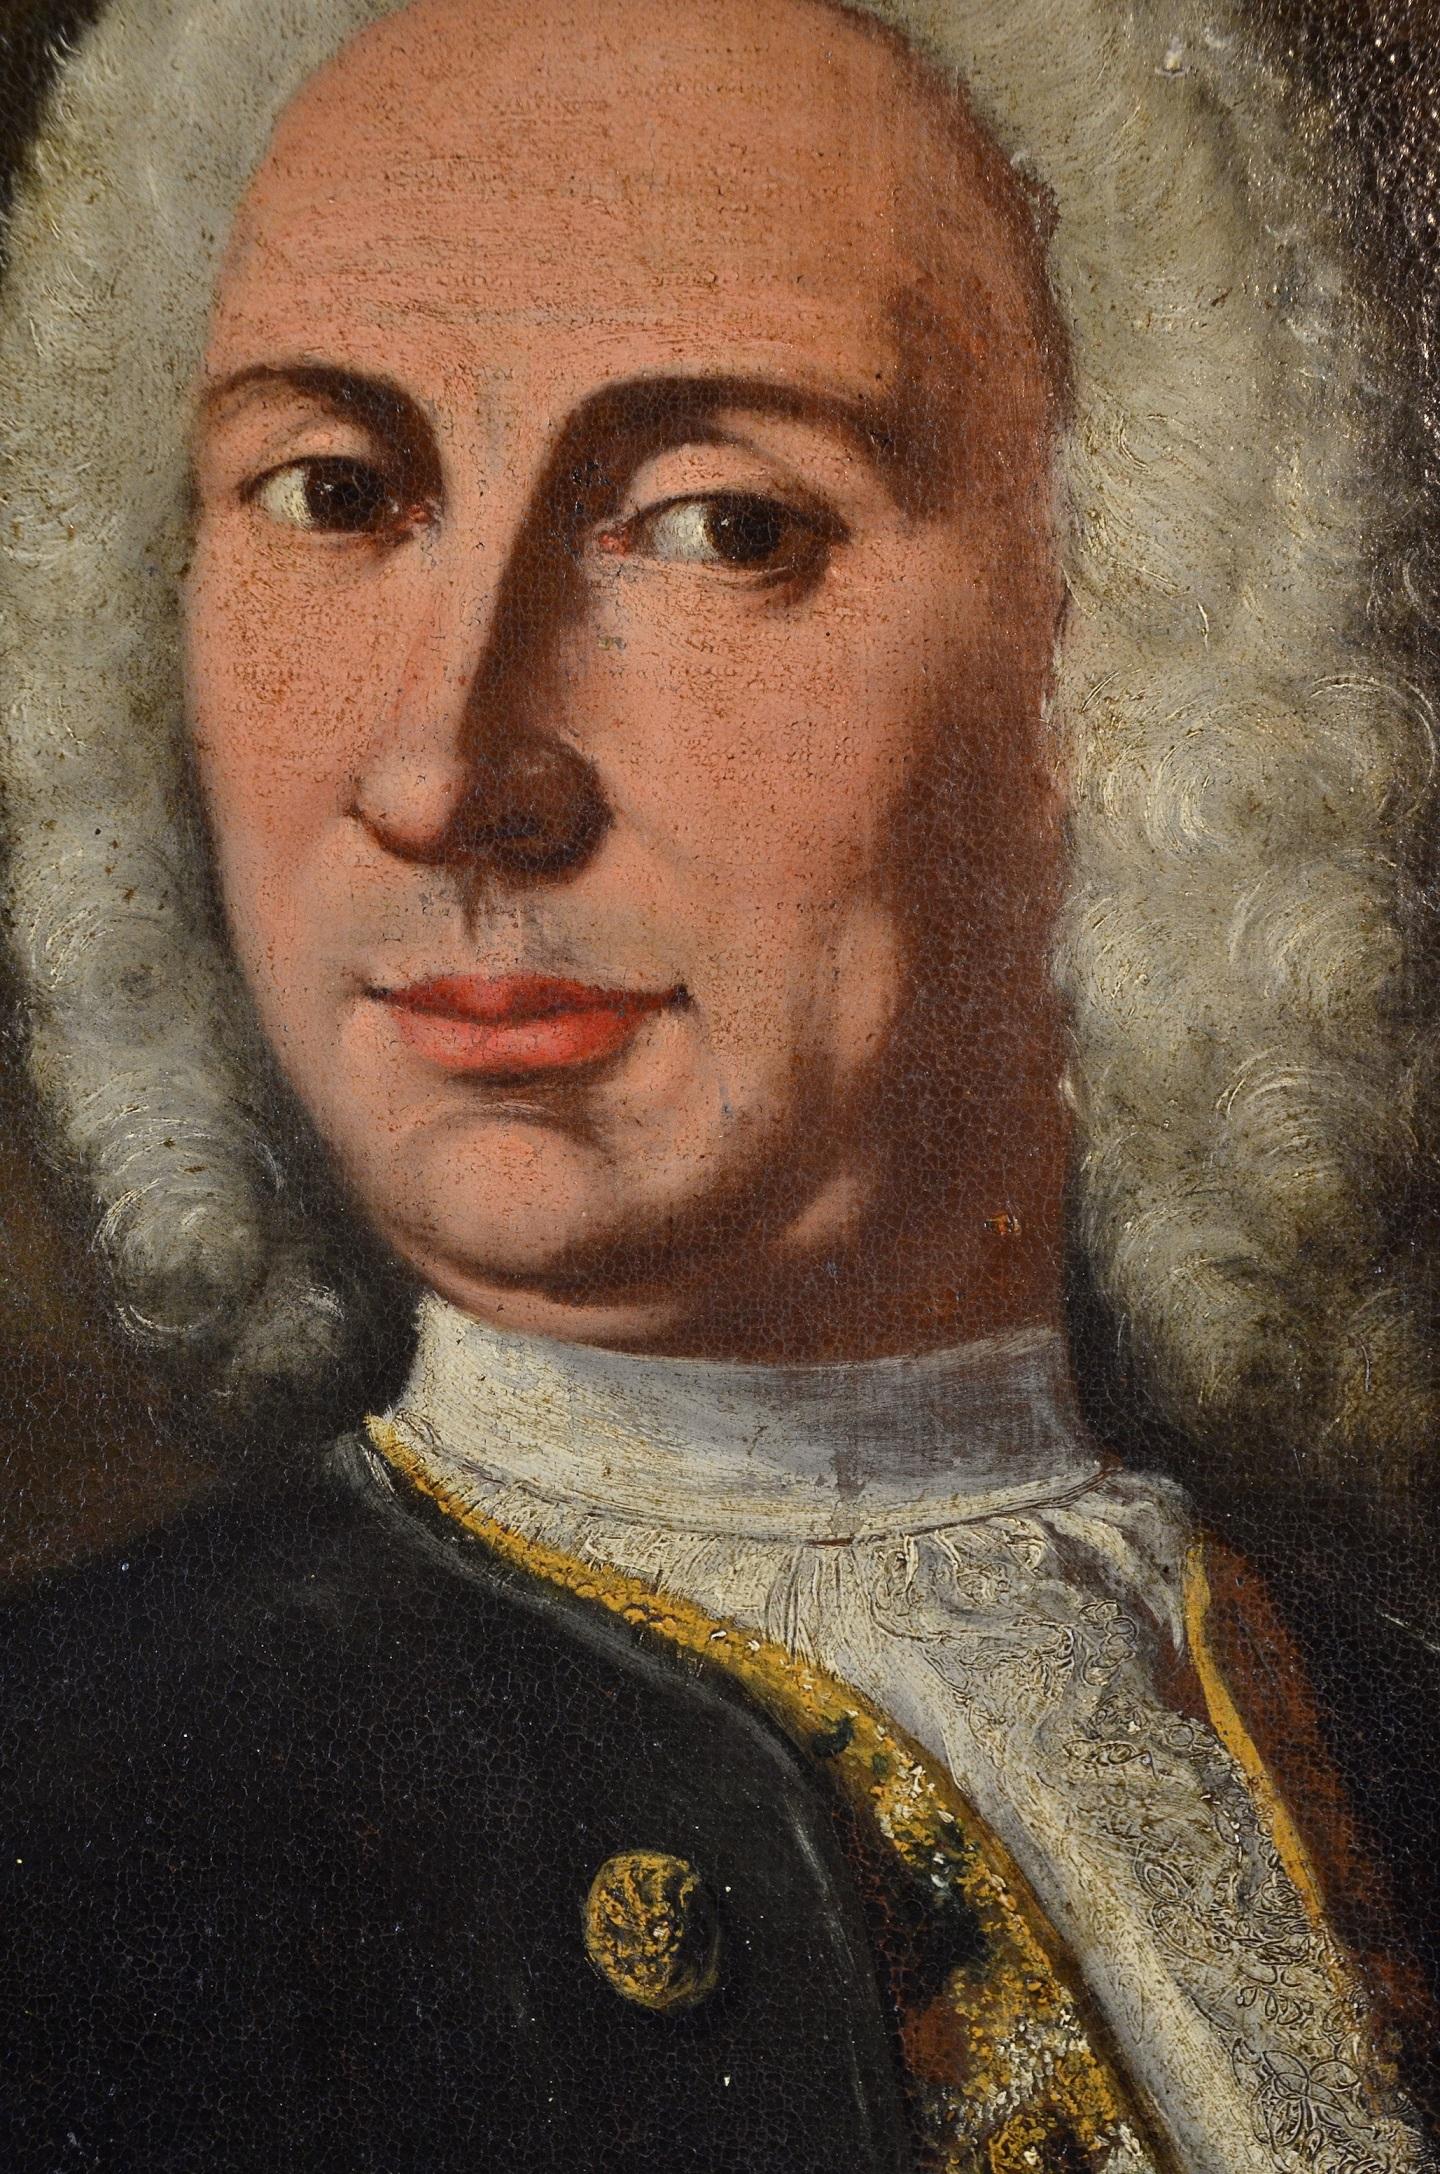 Venetian Gentleman Portrait Paint Oil on canvas 18th Century Italy Baroque Art 3